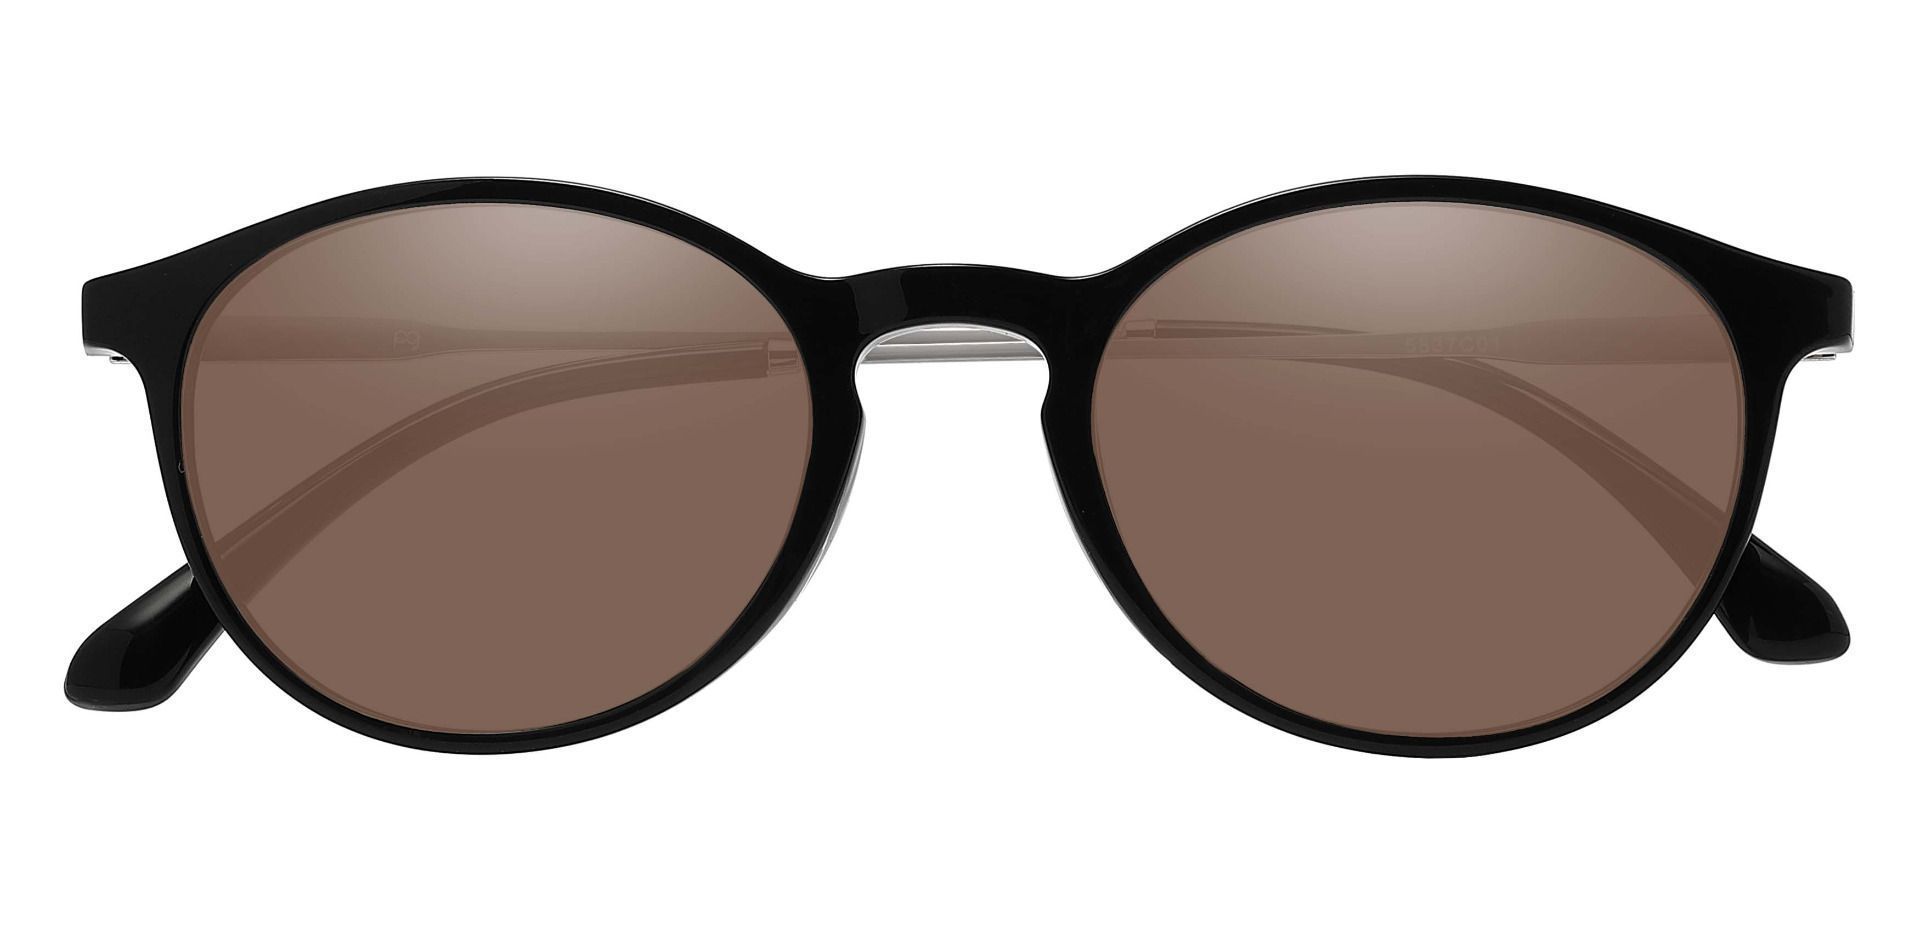 Felton Oval Lined Bifocal Sunglasses - Black Frame With Brown Lenses